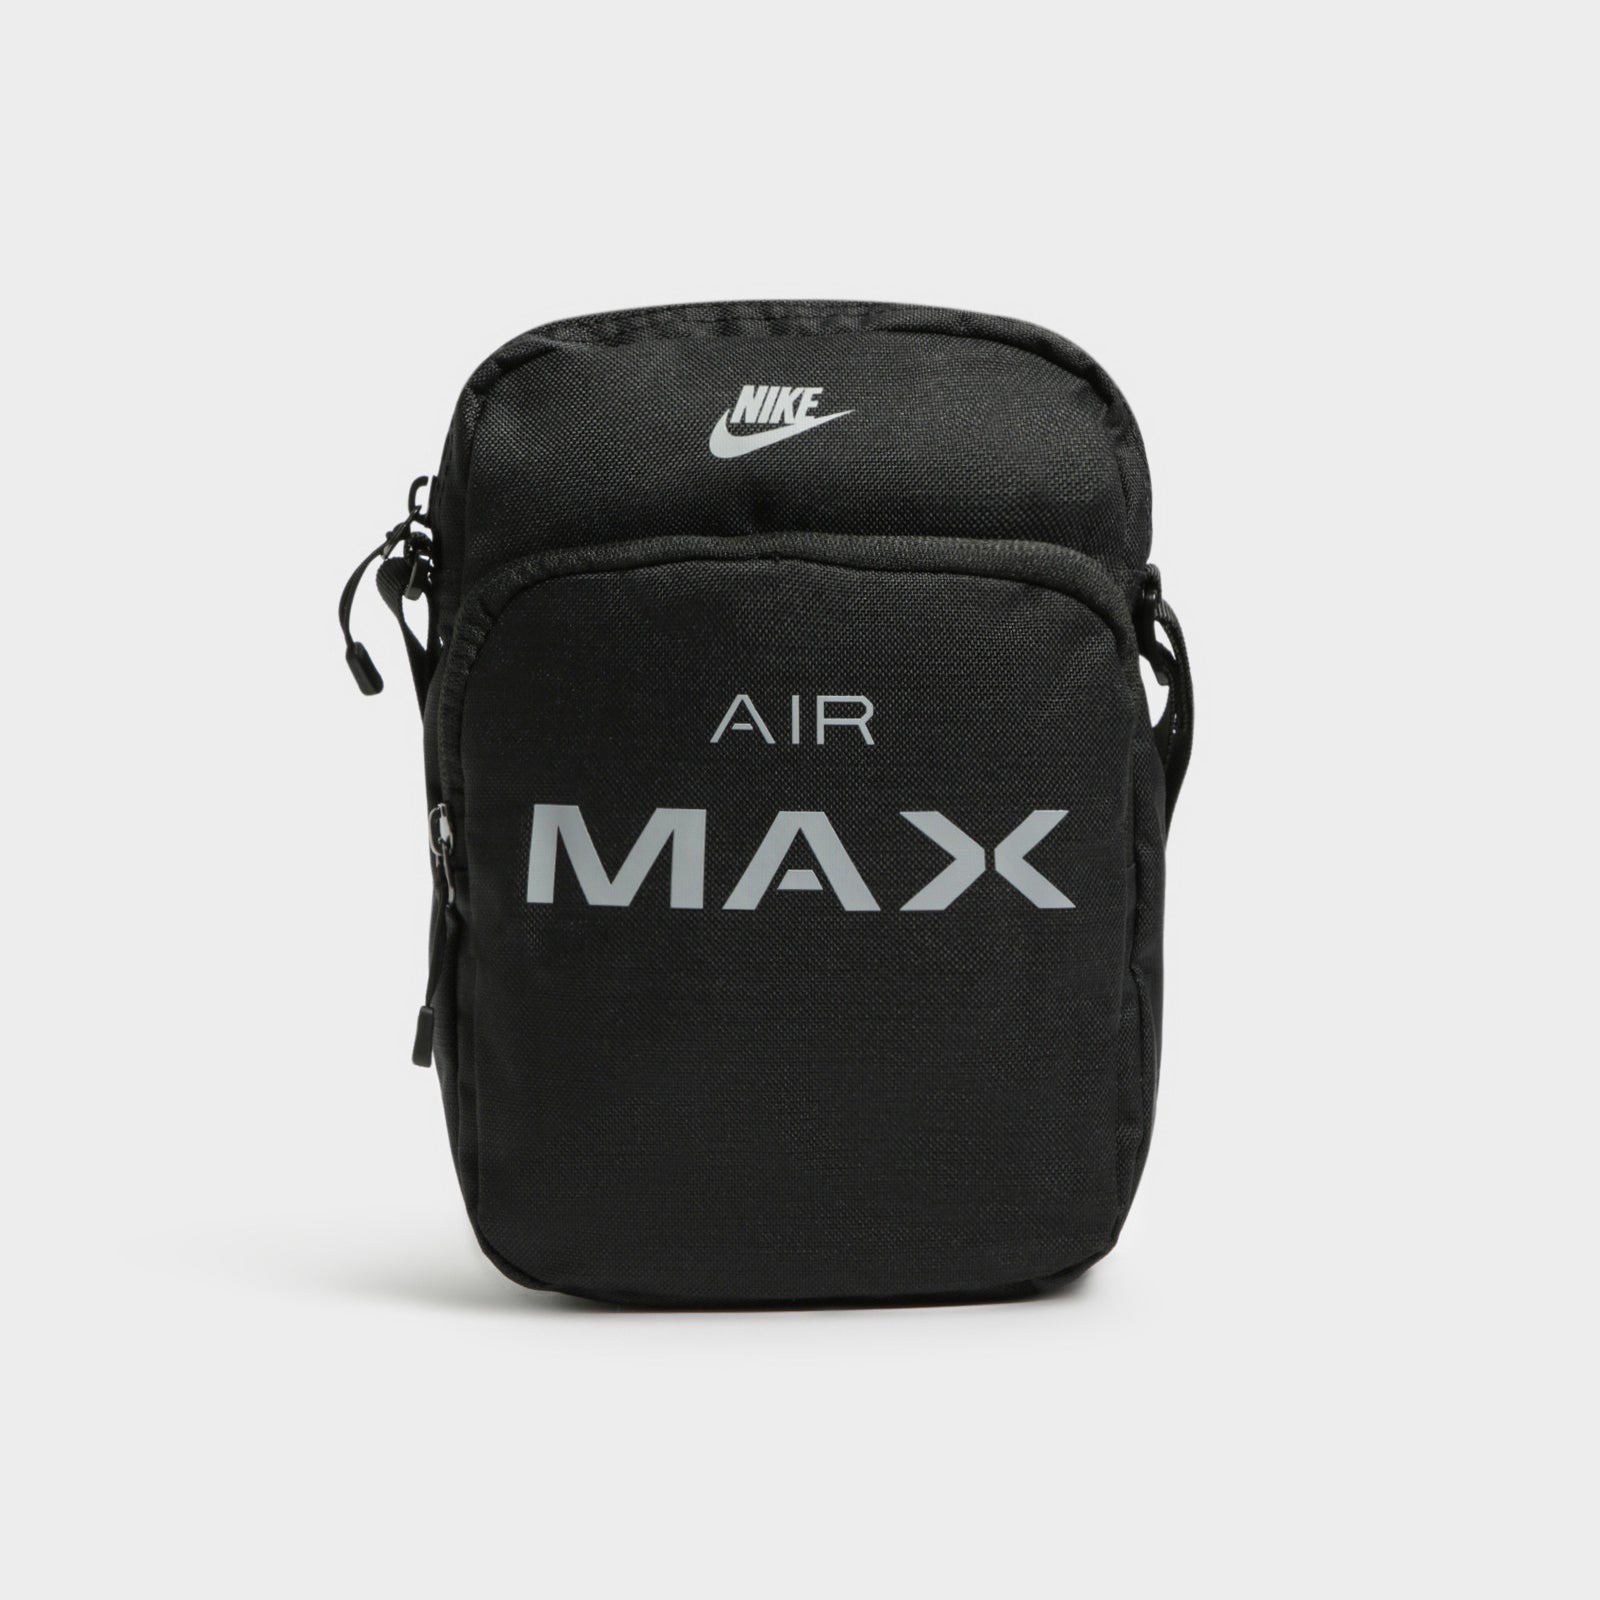 Nike Air Max Small Items Bag in Black 